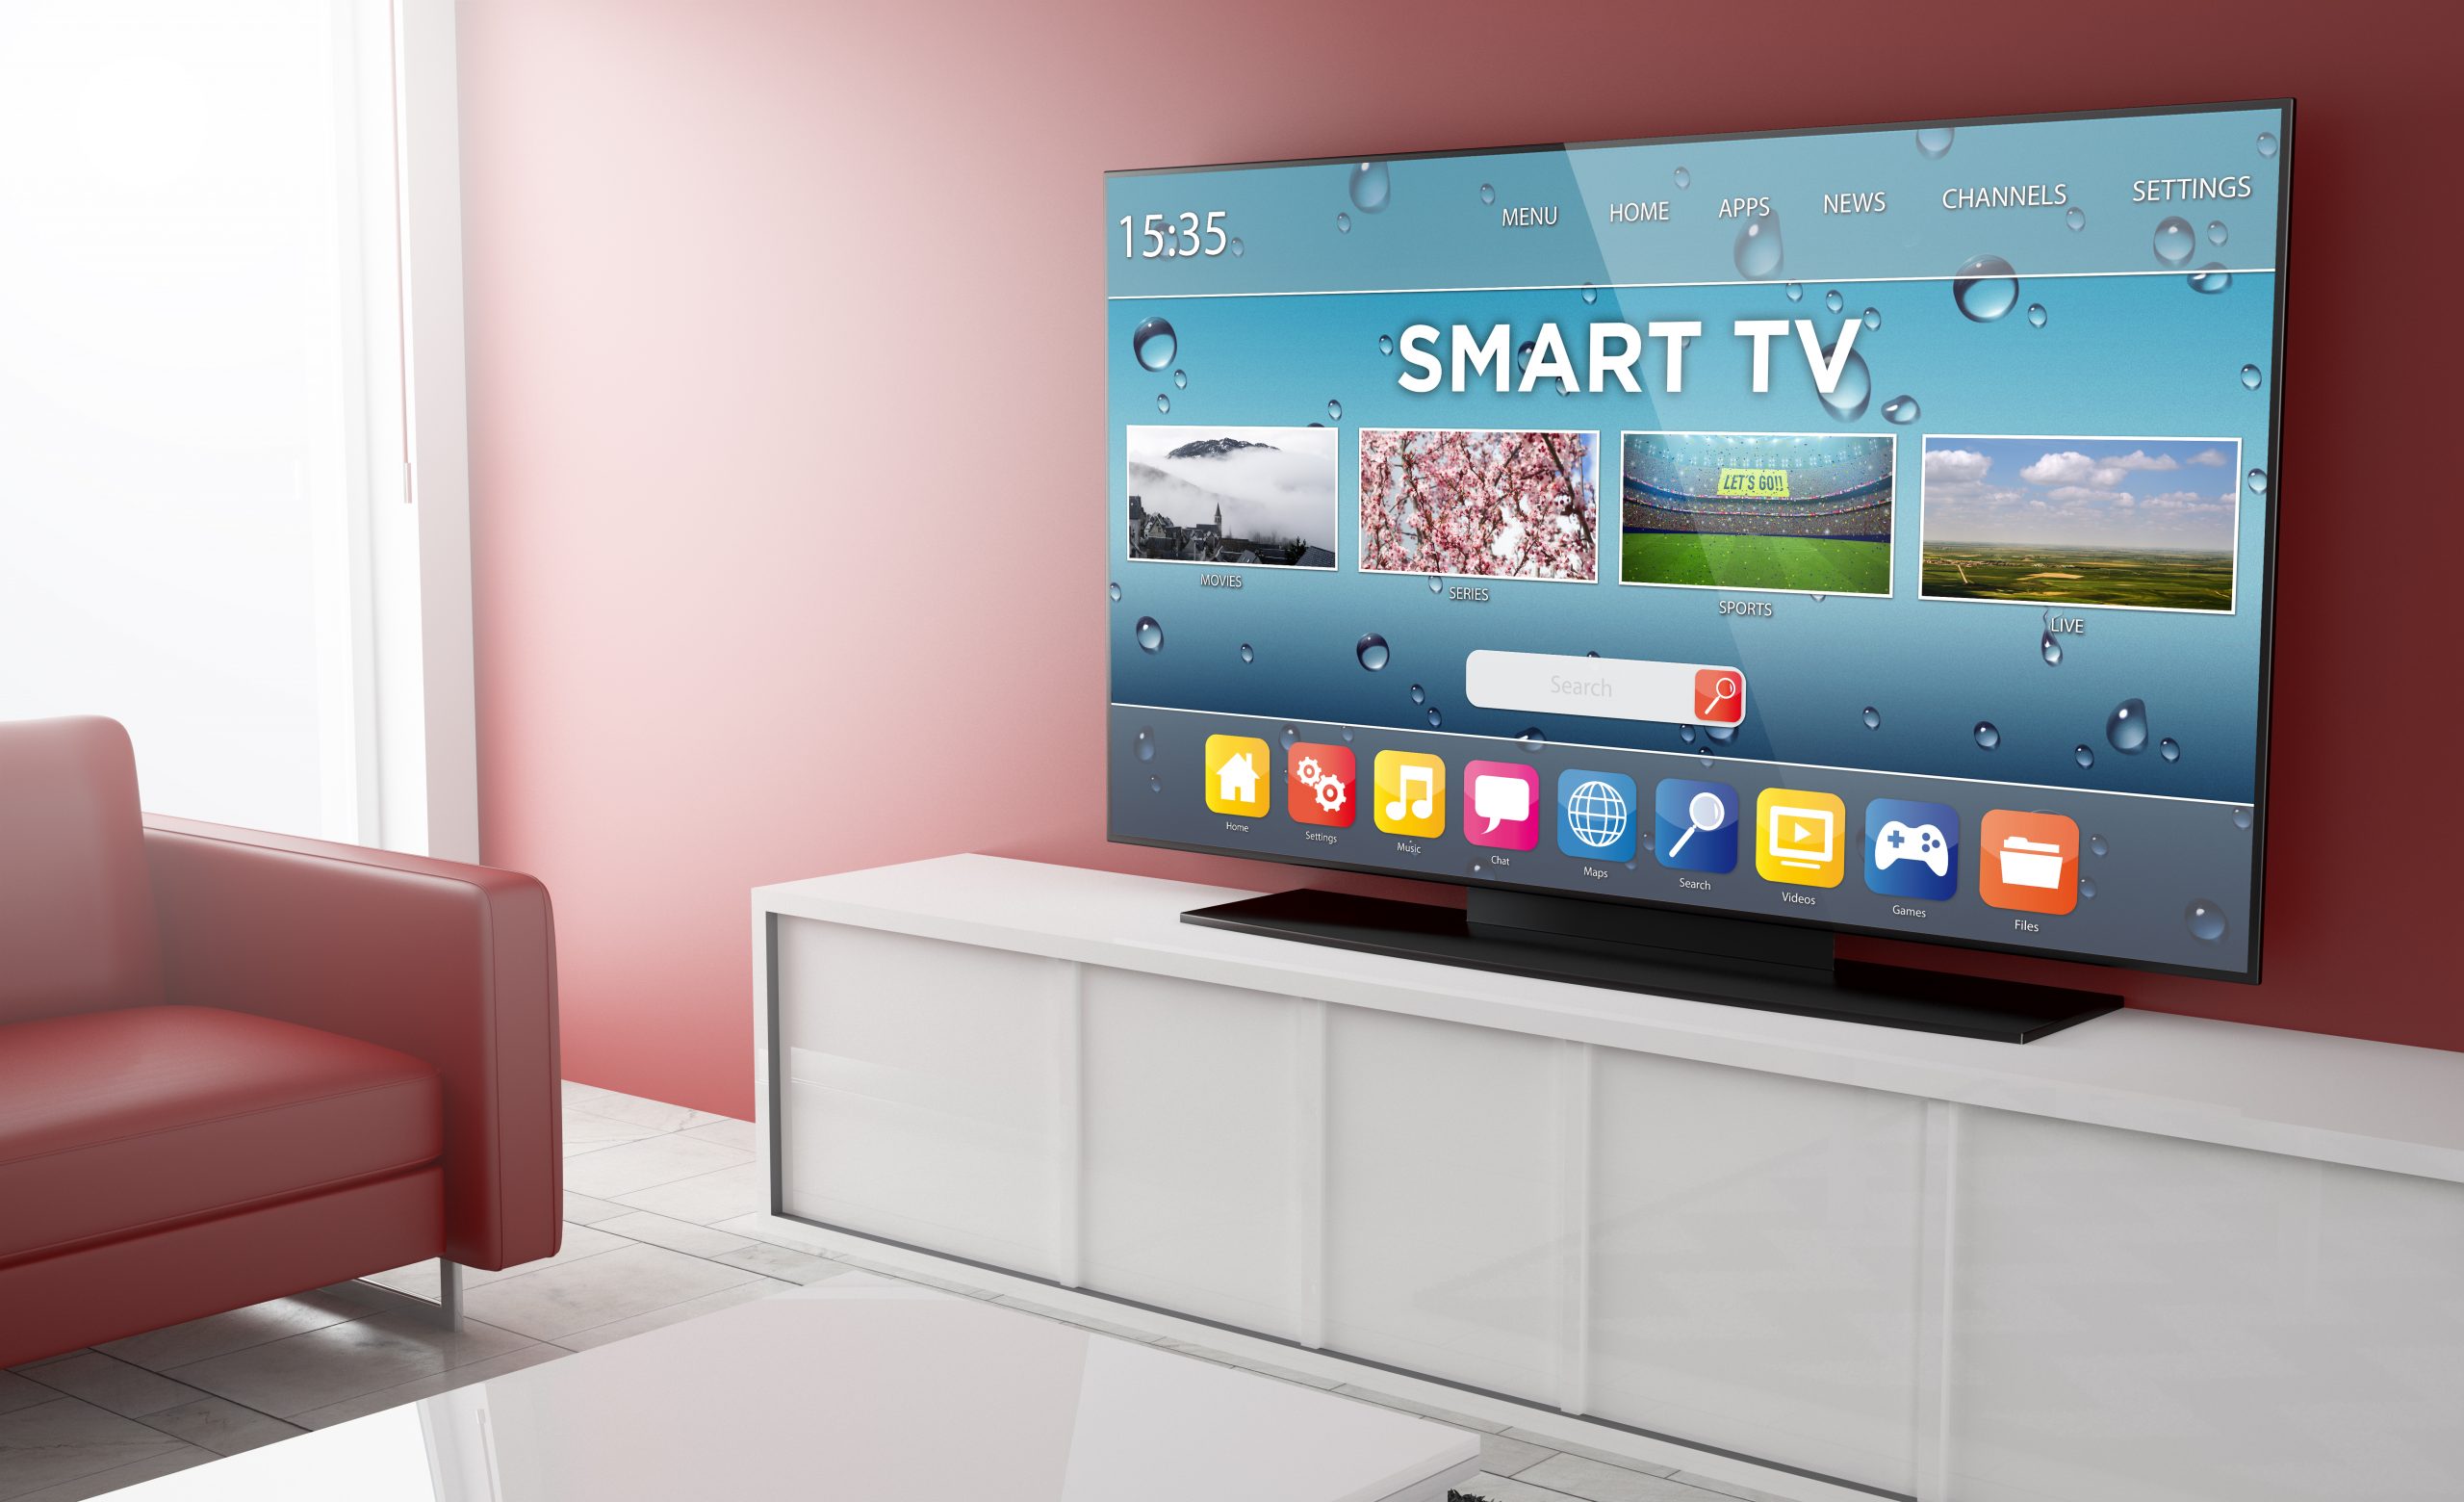 How To Watch IpTV On Smart TV